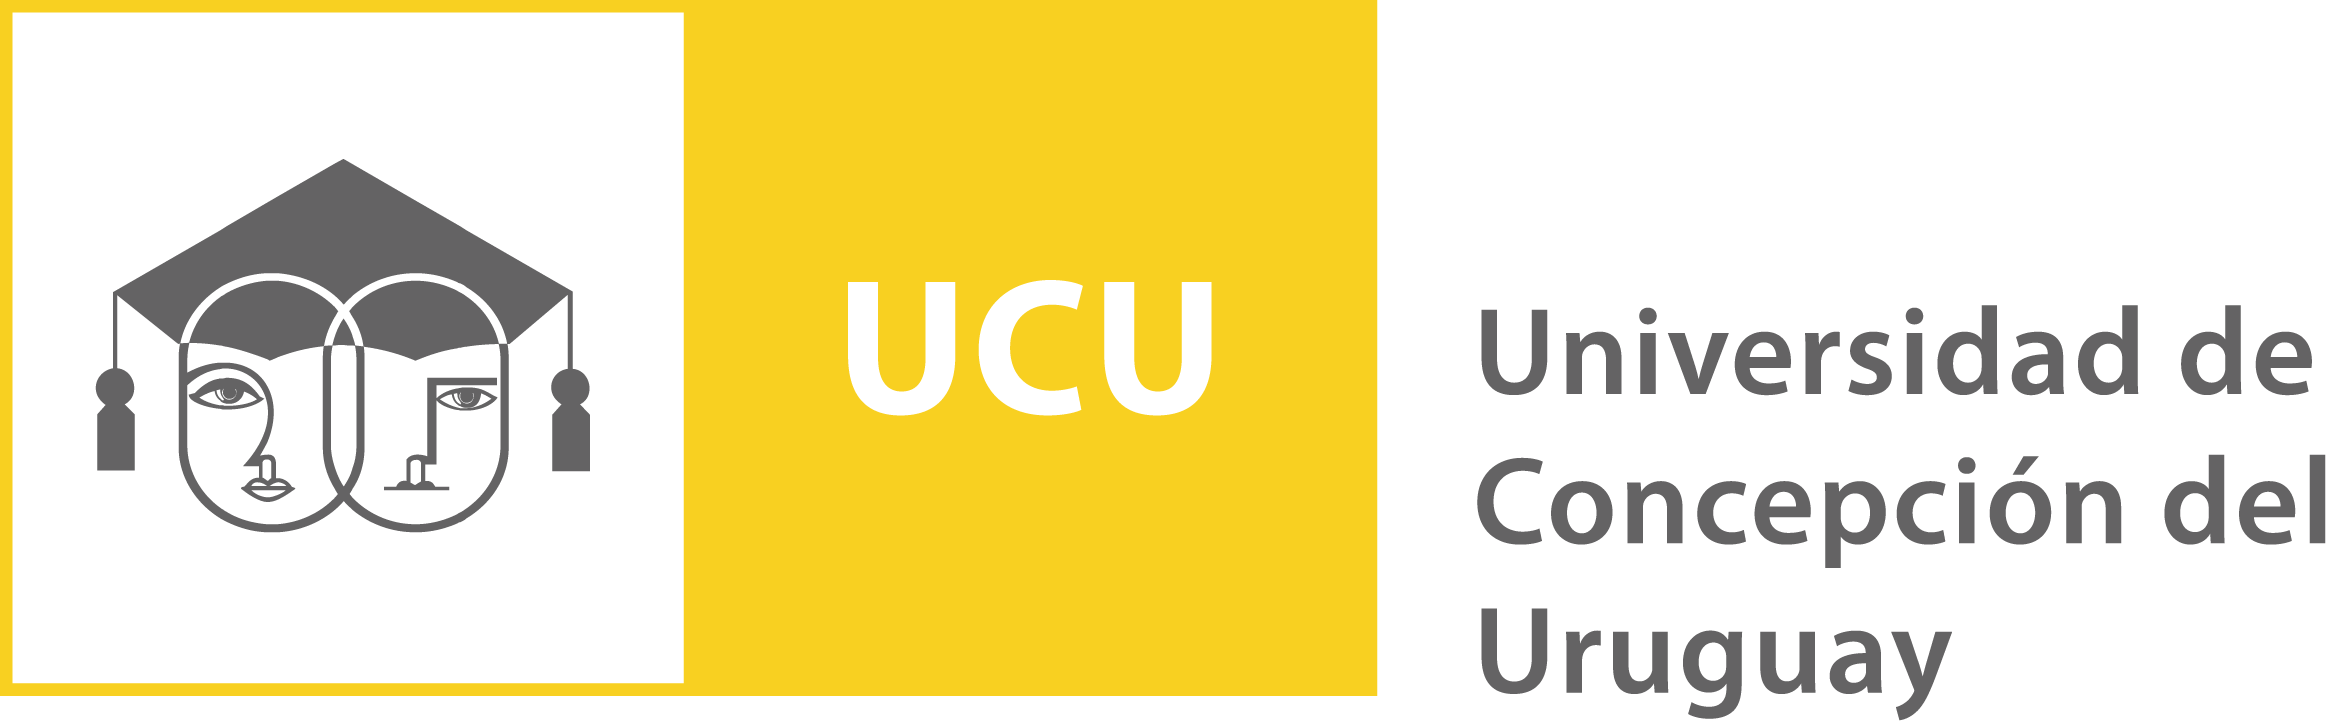 Logo UCU